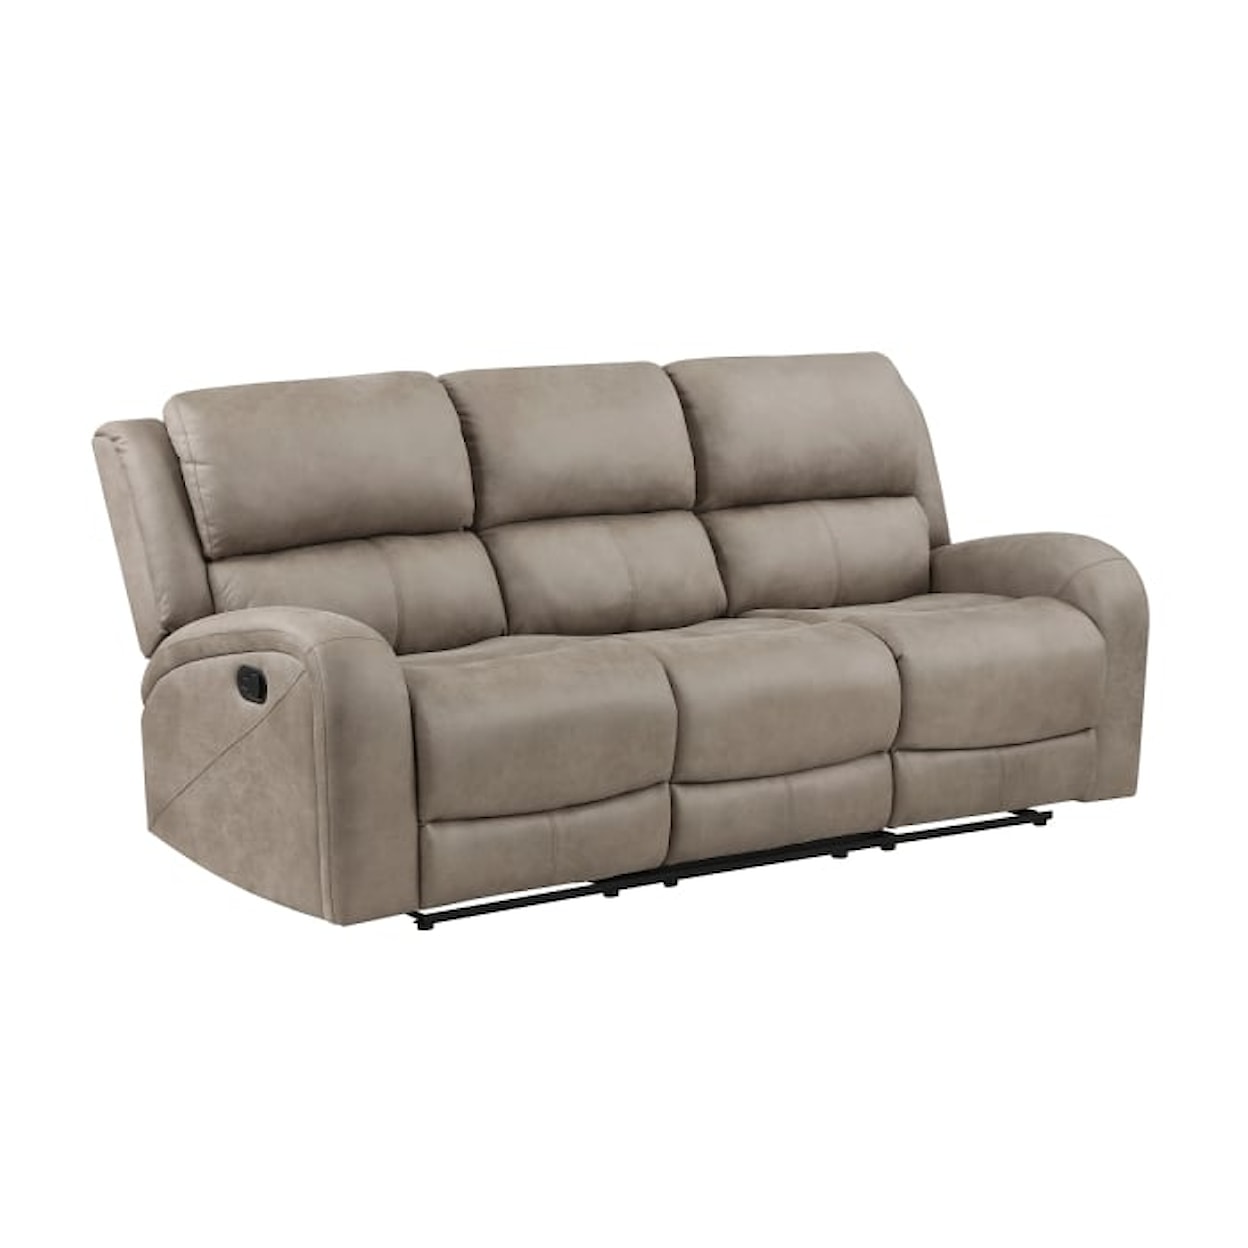 Homelegance Furniture Pagosa Double Reclining Sofa